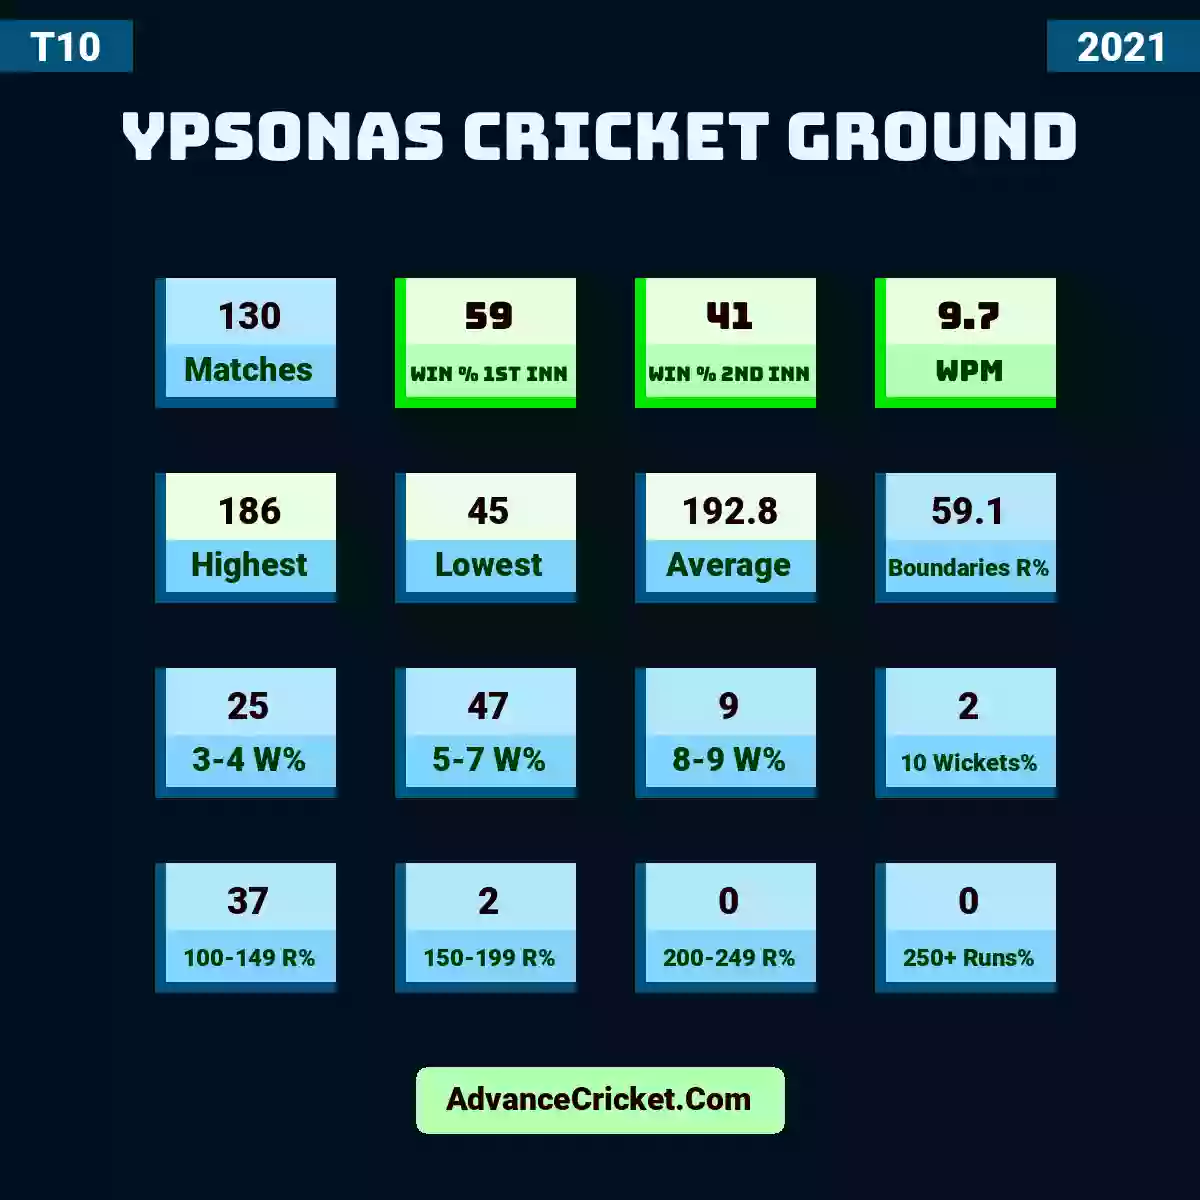 Image showing Ypsonas Cricket Ground with Matches: 130, Win % 1st Inn: 59, Win % 2nd Inn: 41, WPM: 9.7, Highest: 186, Lowest: 45, Average: 192.8, Boundaries R%: 59.1, 3-4 W%: 25, 5-7 W%: 47, 8-9 W%: 9, 10 Wickets%: 2, 100-149 R%: 37, 150-199 R%: 2, 200-249 R%: 0, 250+ Runs%: 0.